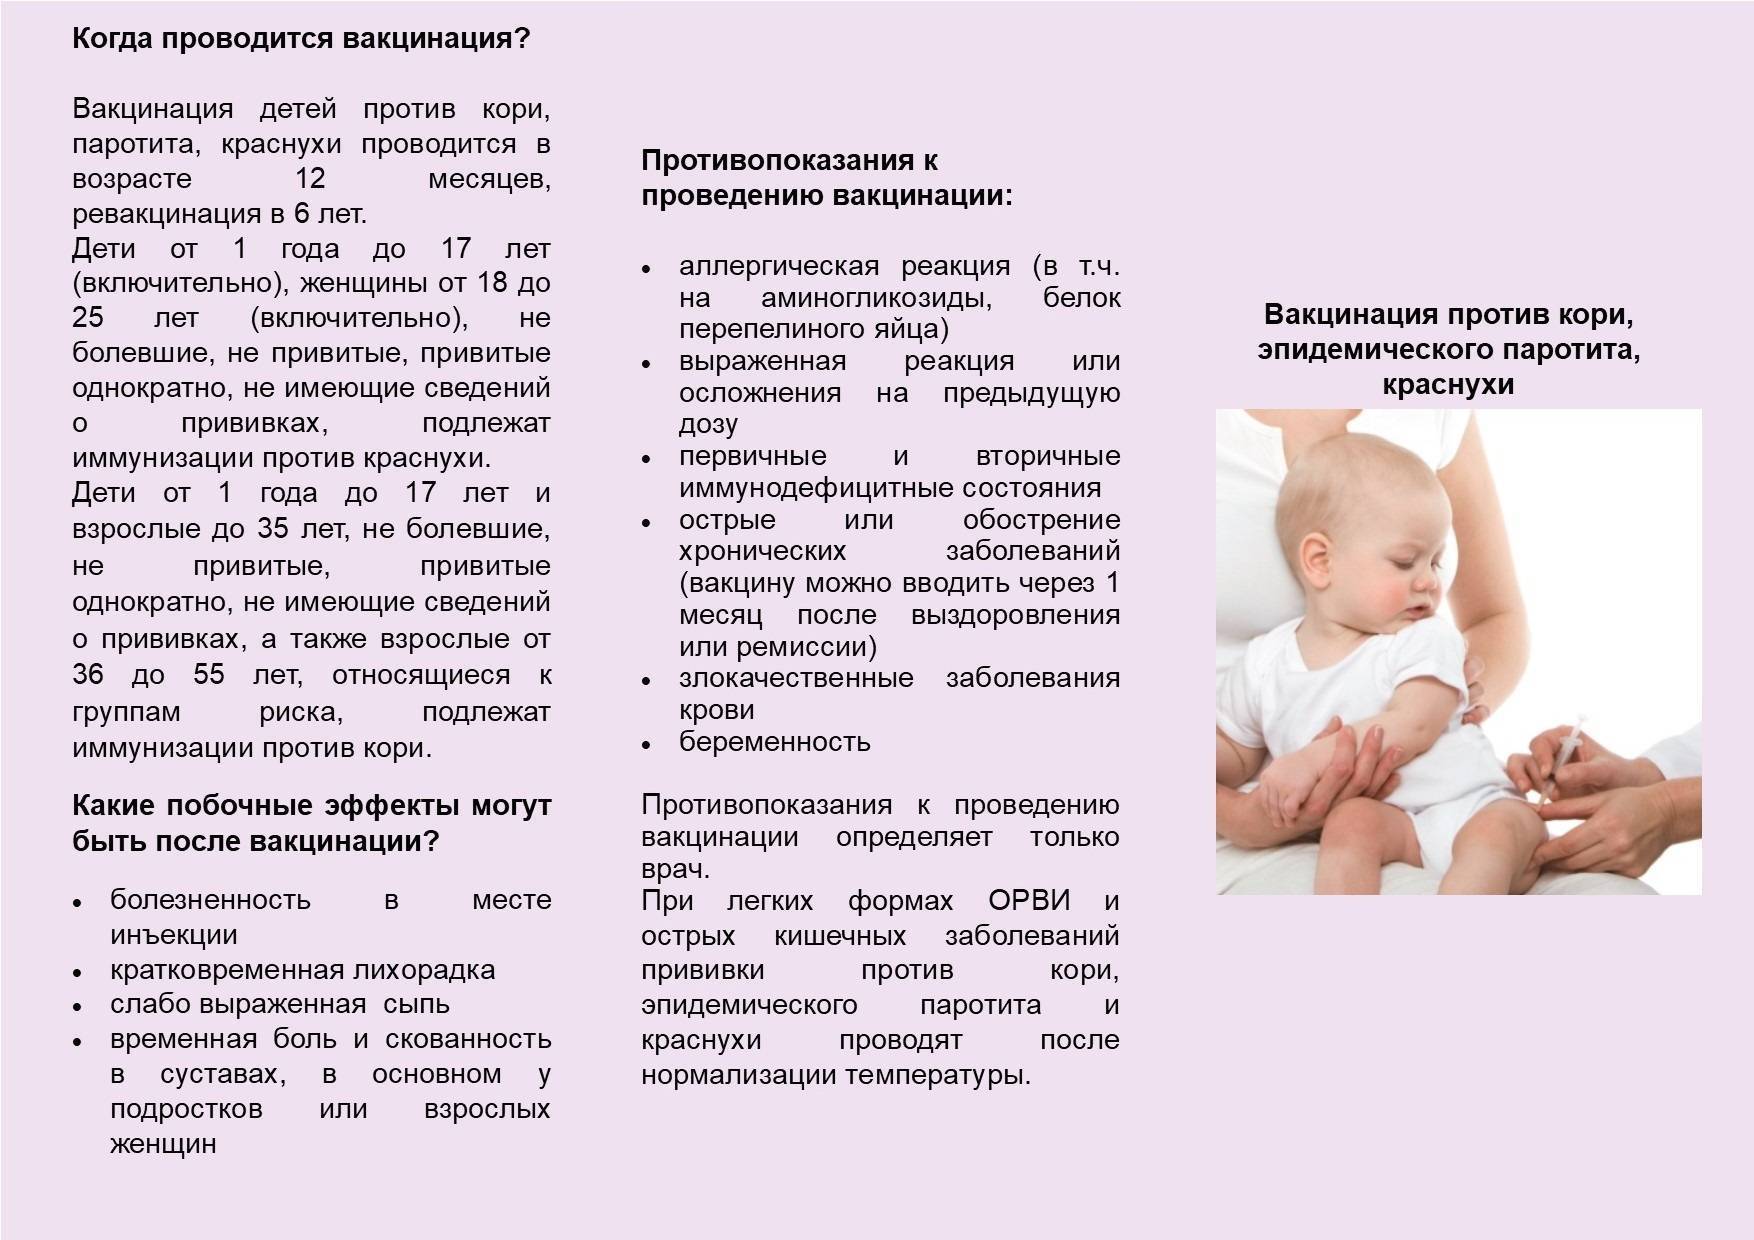 Прививка акдс детям: состав, график вакцинации, осложнение и подготовка